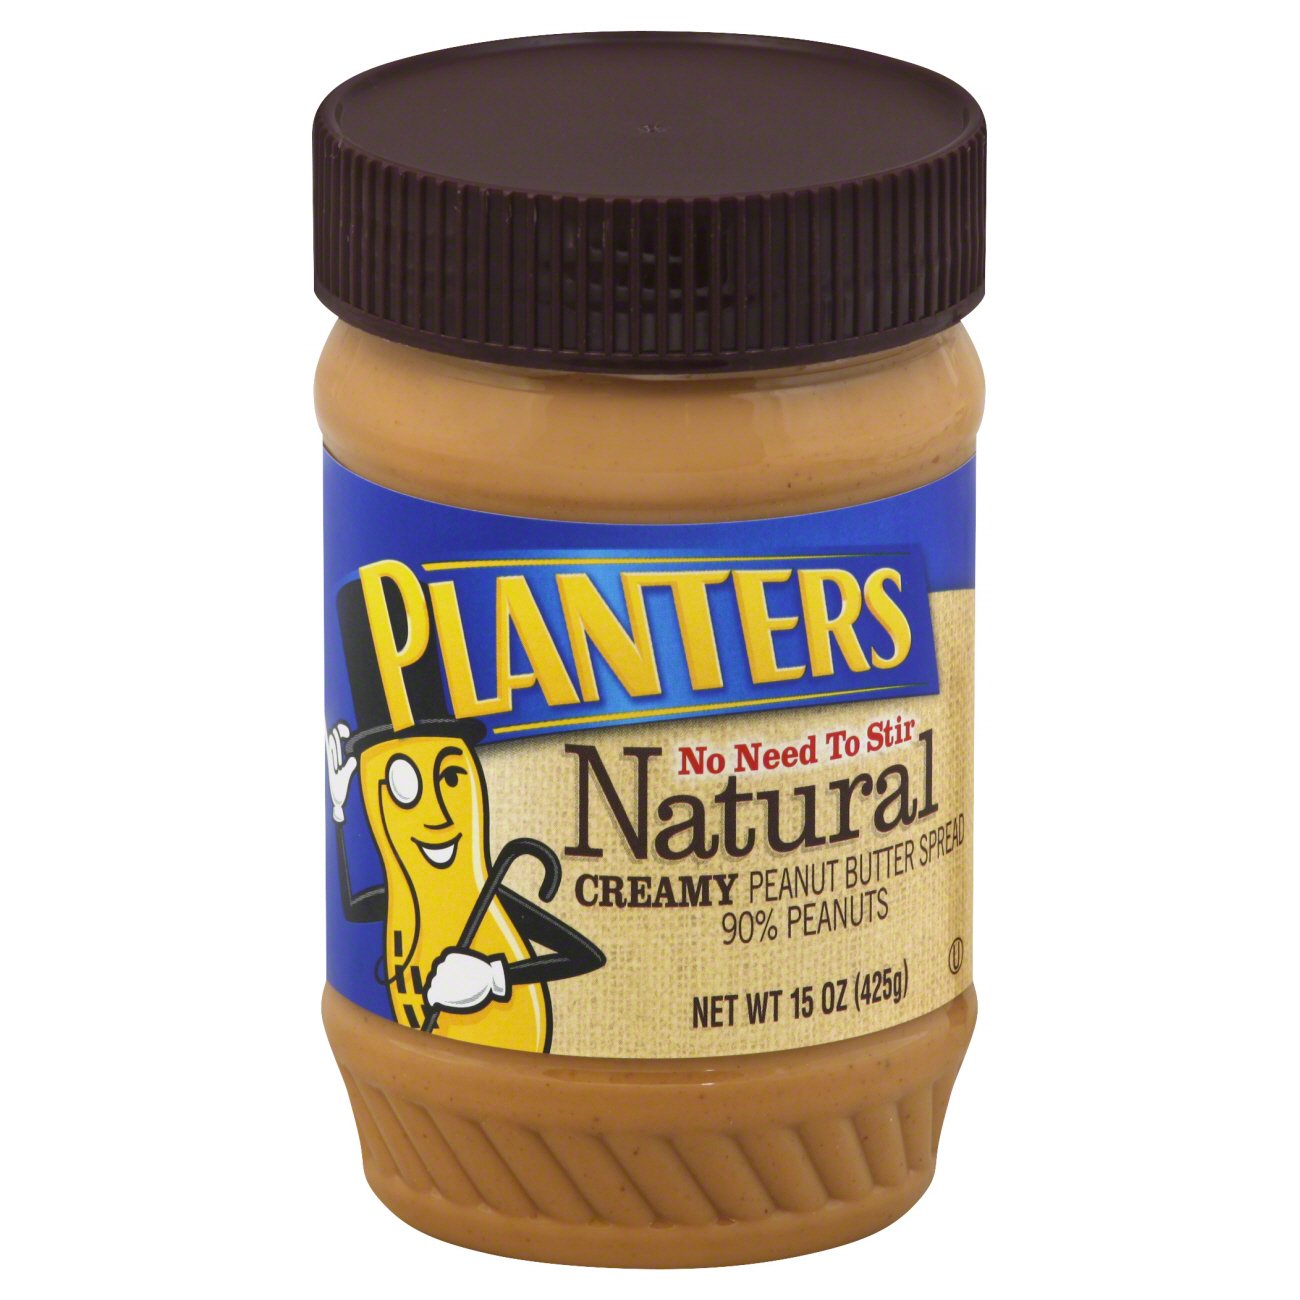 Planters Natural Peanut Butter - Peanut at H-E-B